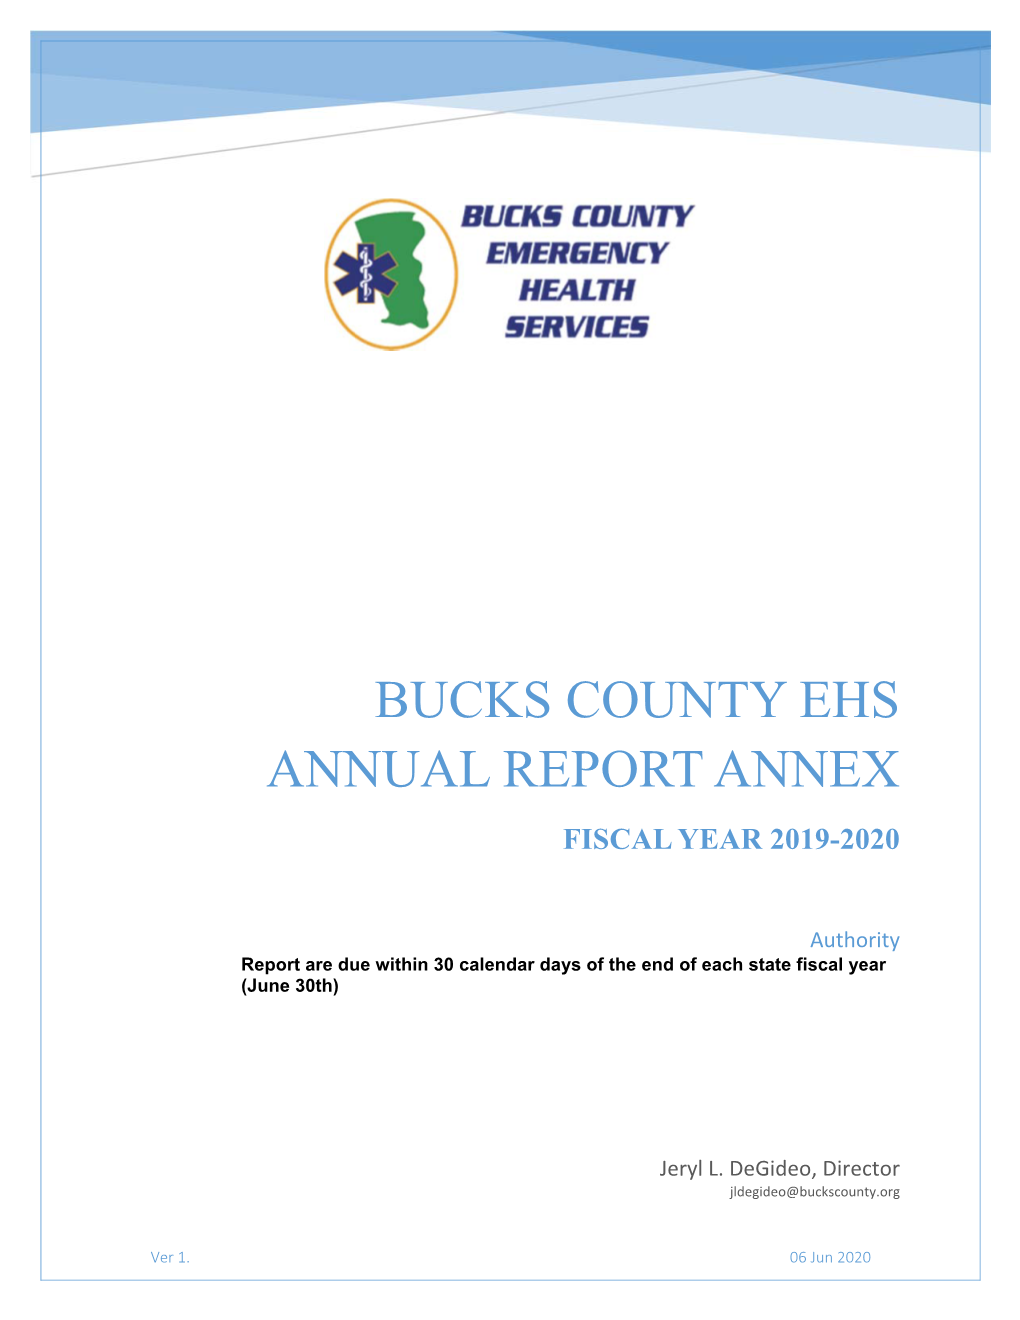 Bucks County Ehs Annual Report Annex Fiscal Year 2019-2020